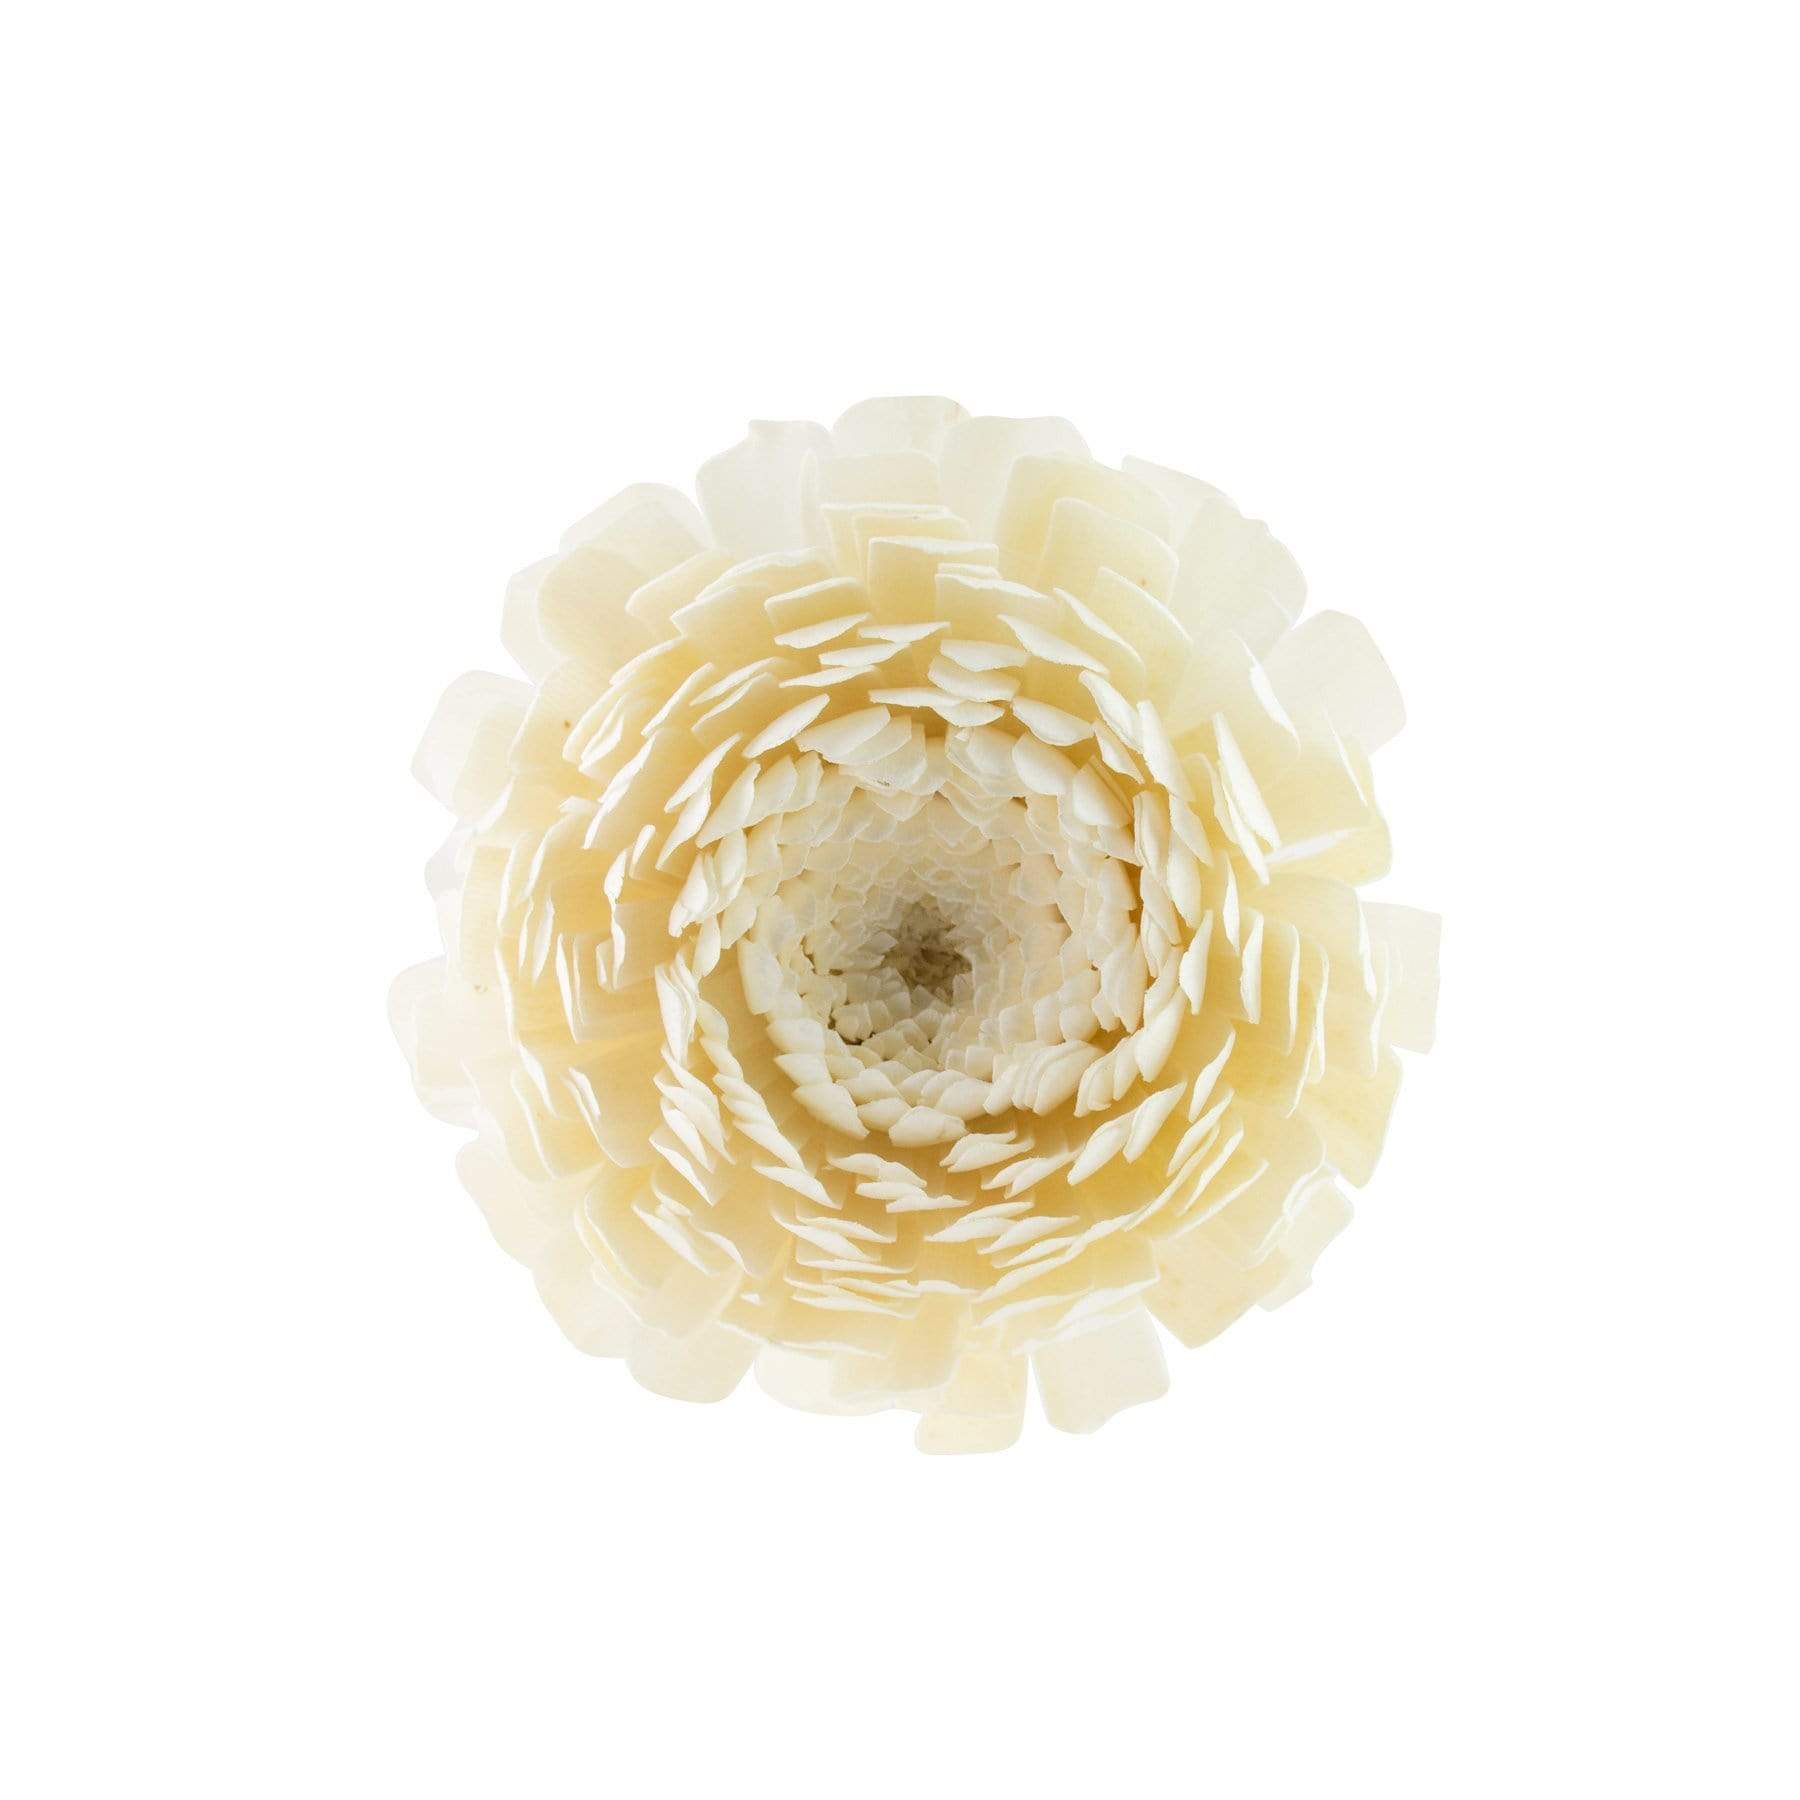 HYSSES Home Scents 5" Solar Flower Diffuser Refill - Chrysanthemum 5"